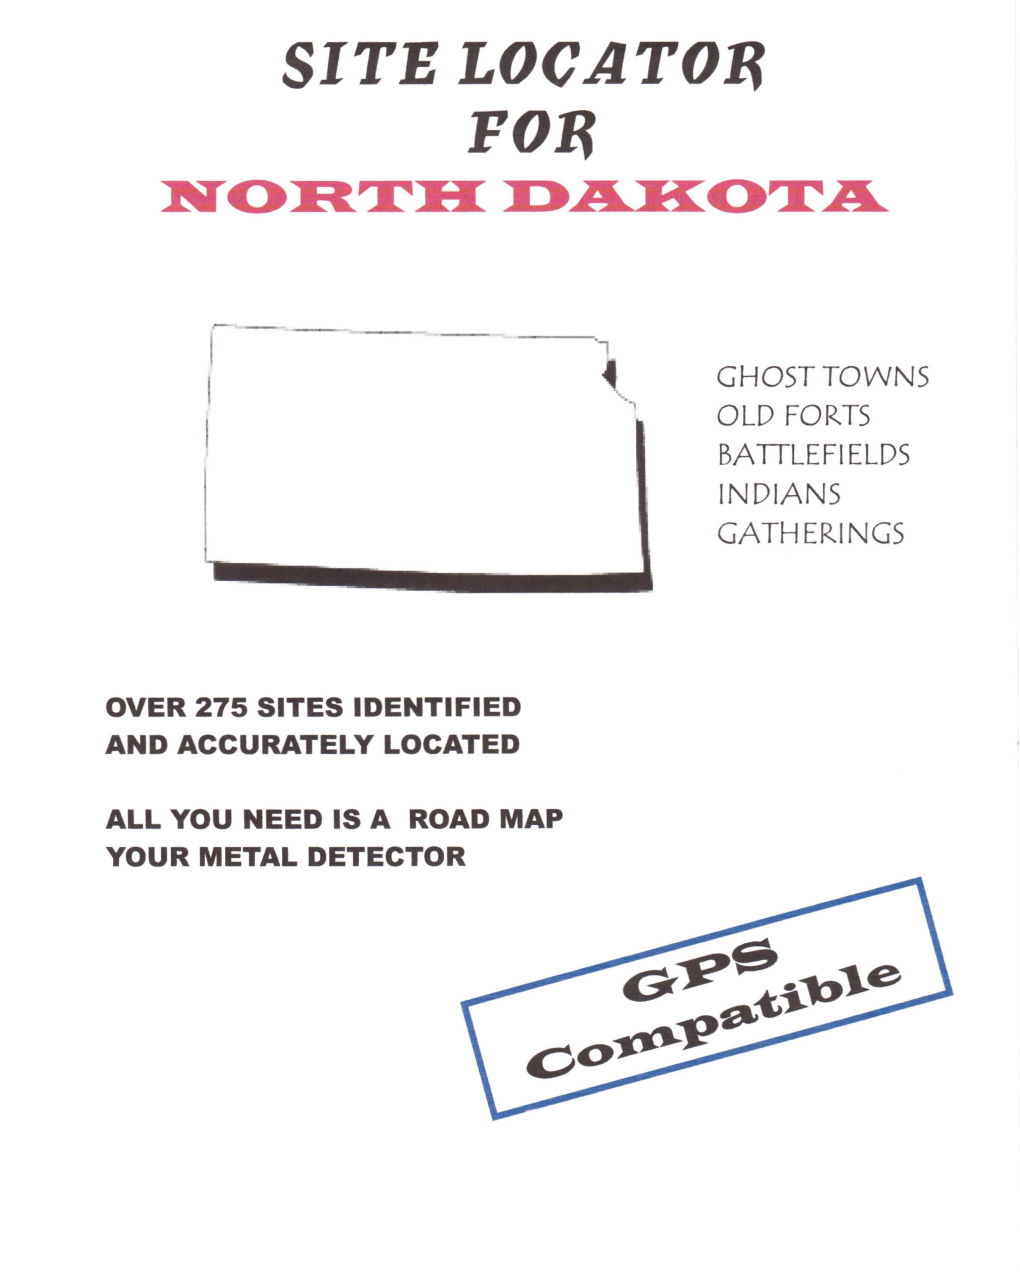 Site Locator for North Dakota